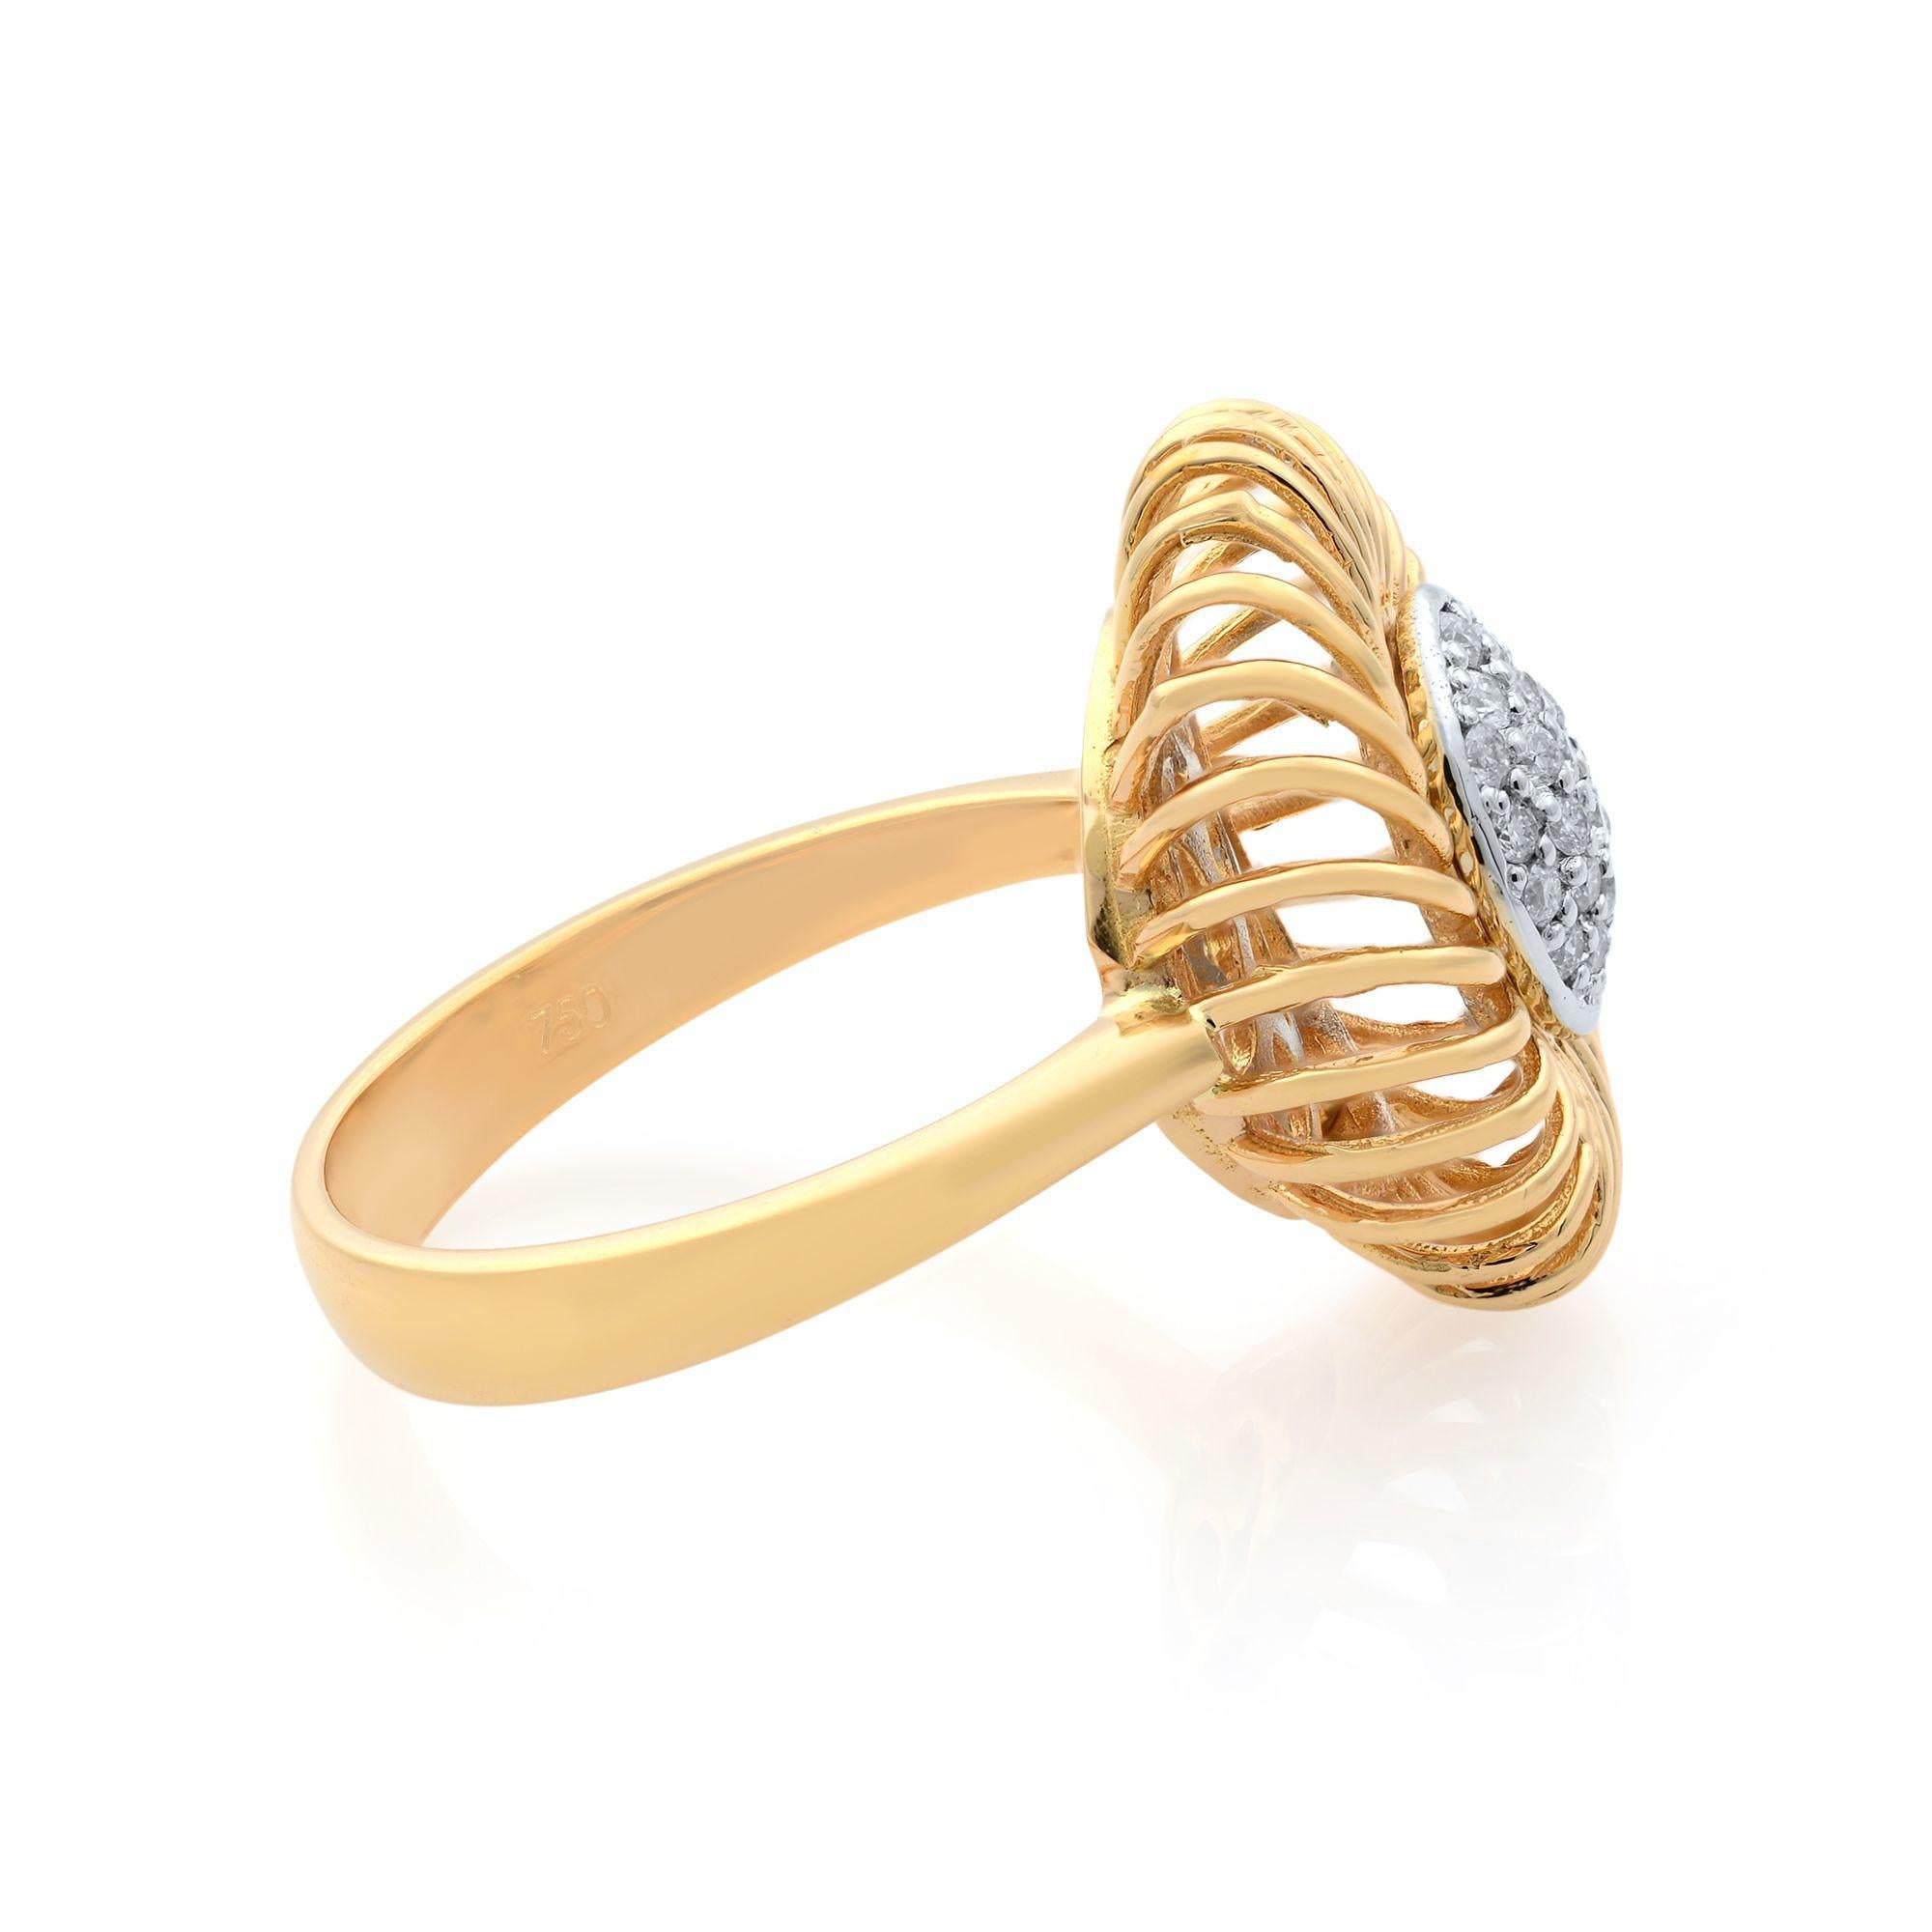 Modern Rachel Koen Diamond Unique Cocktail Ring 18K Rose Gold 0.15 Cttw Size 6.75 For Sale